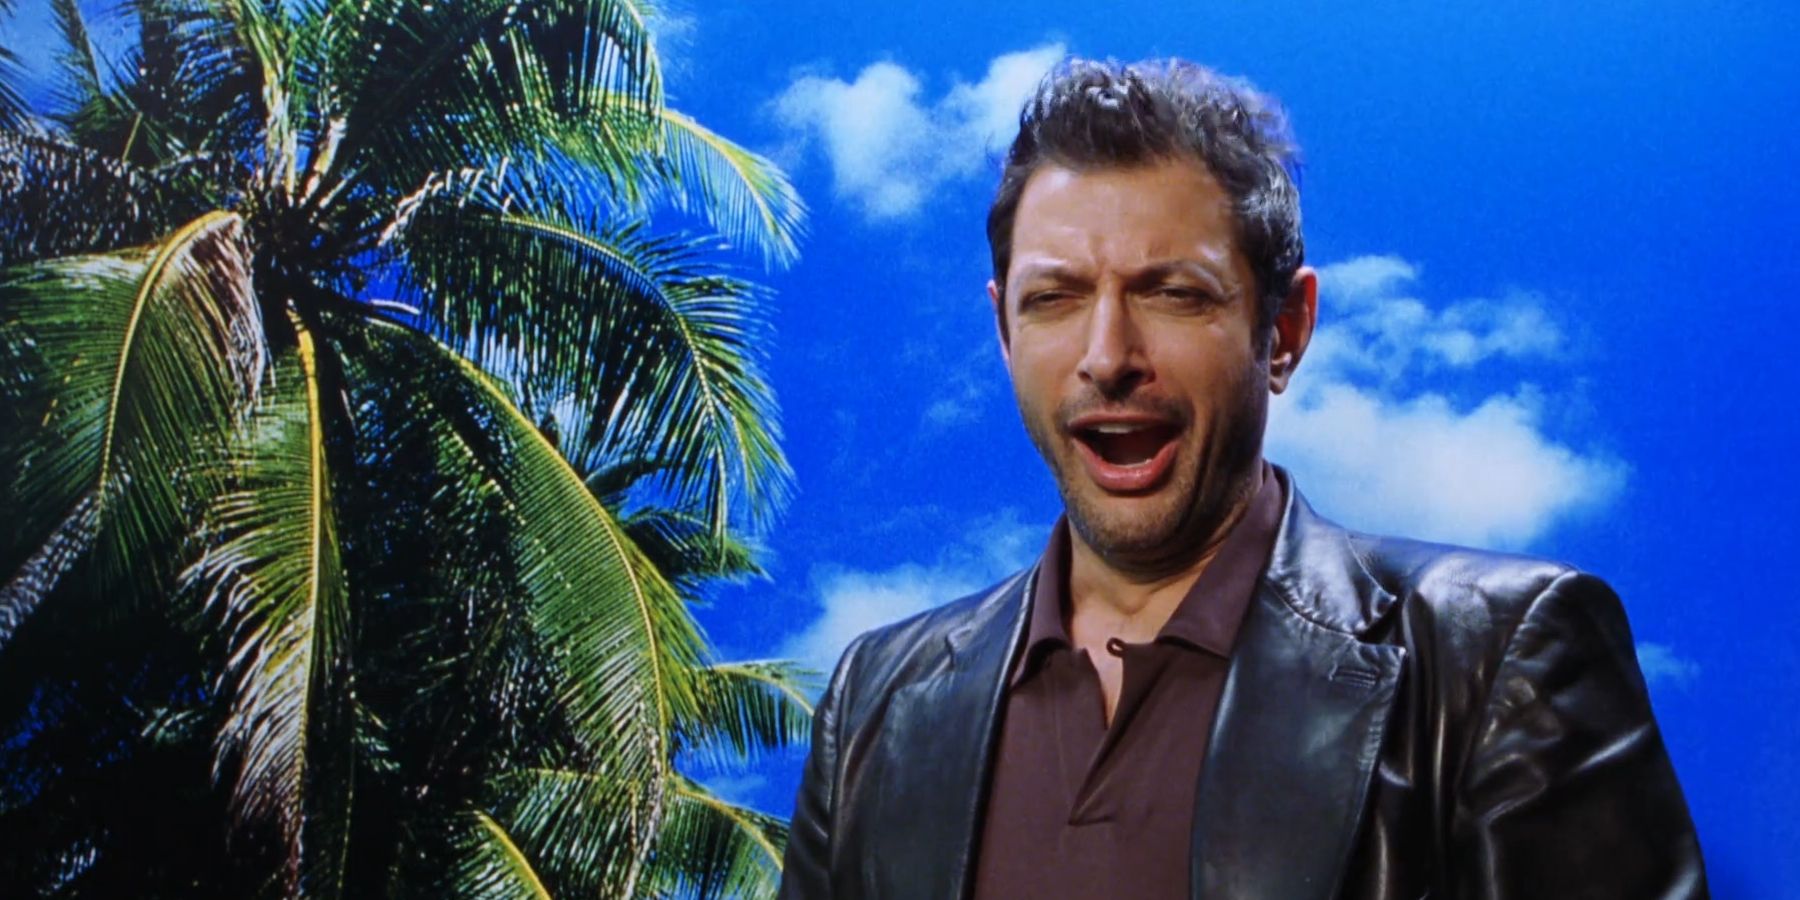 Jurassic World Dominion similar to The Lost World, Jeff Goldblum yawning